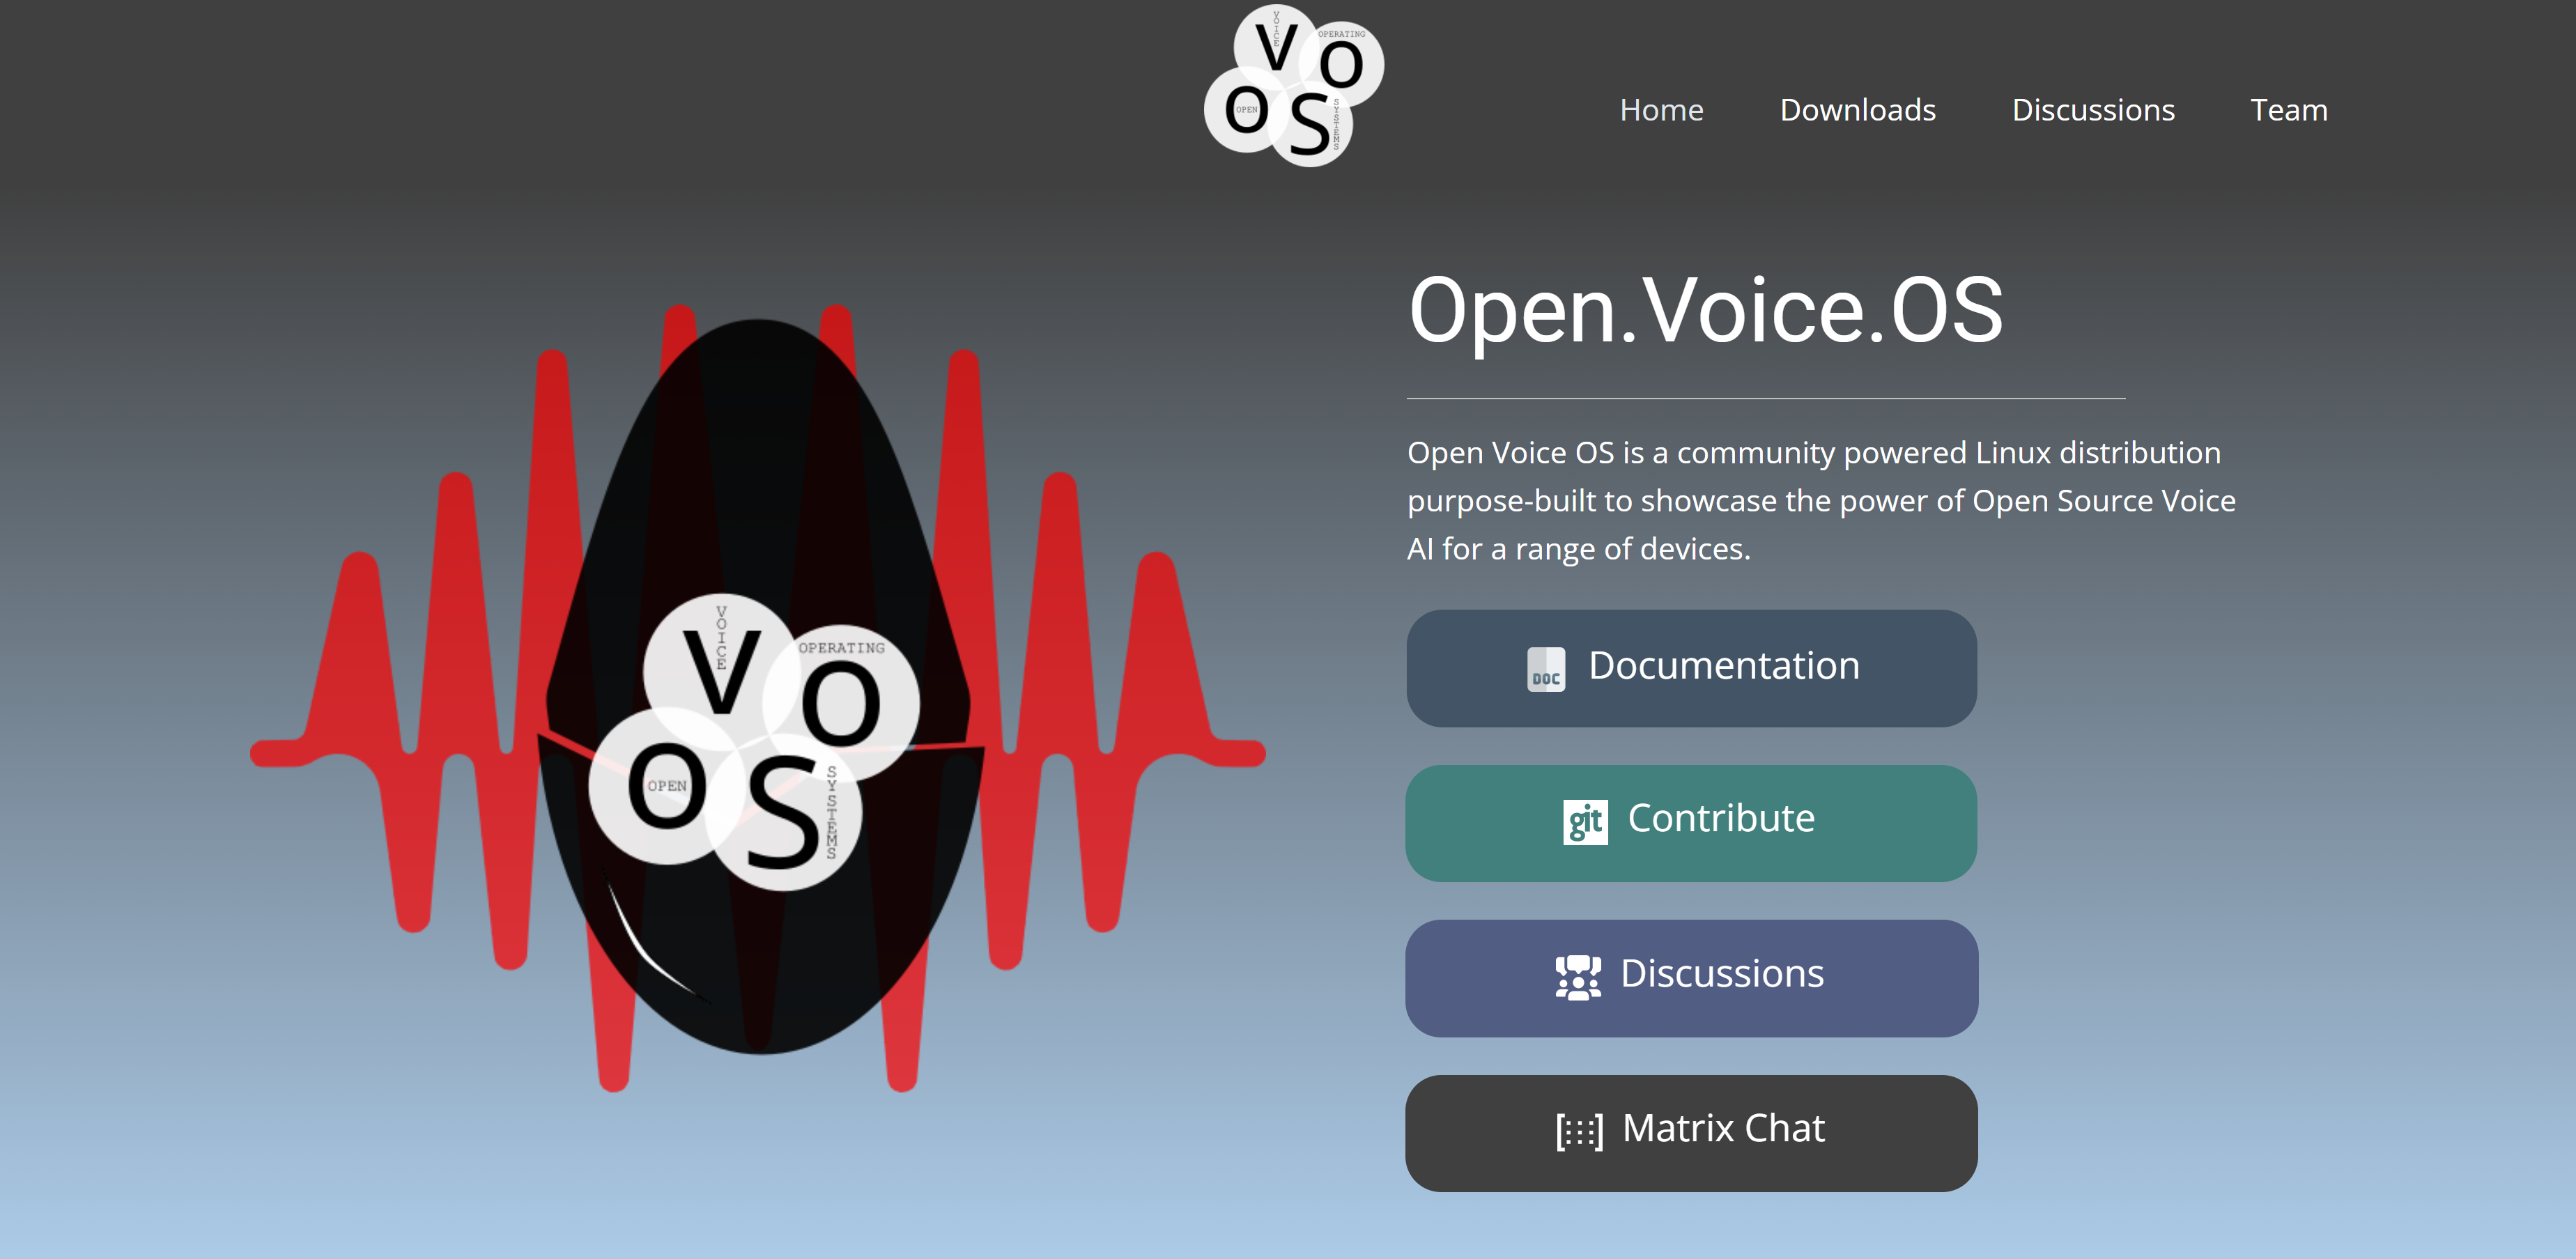 Post: Open Voice OS